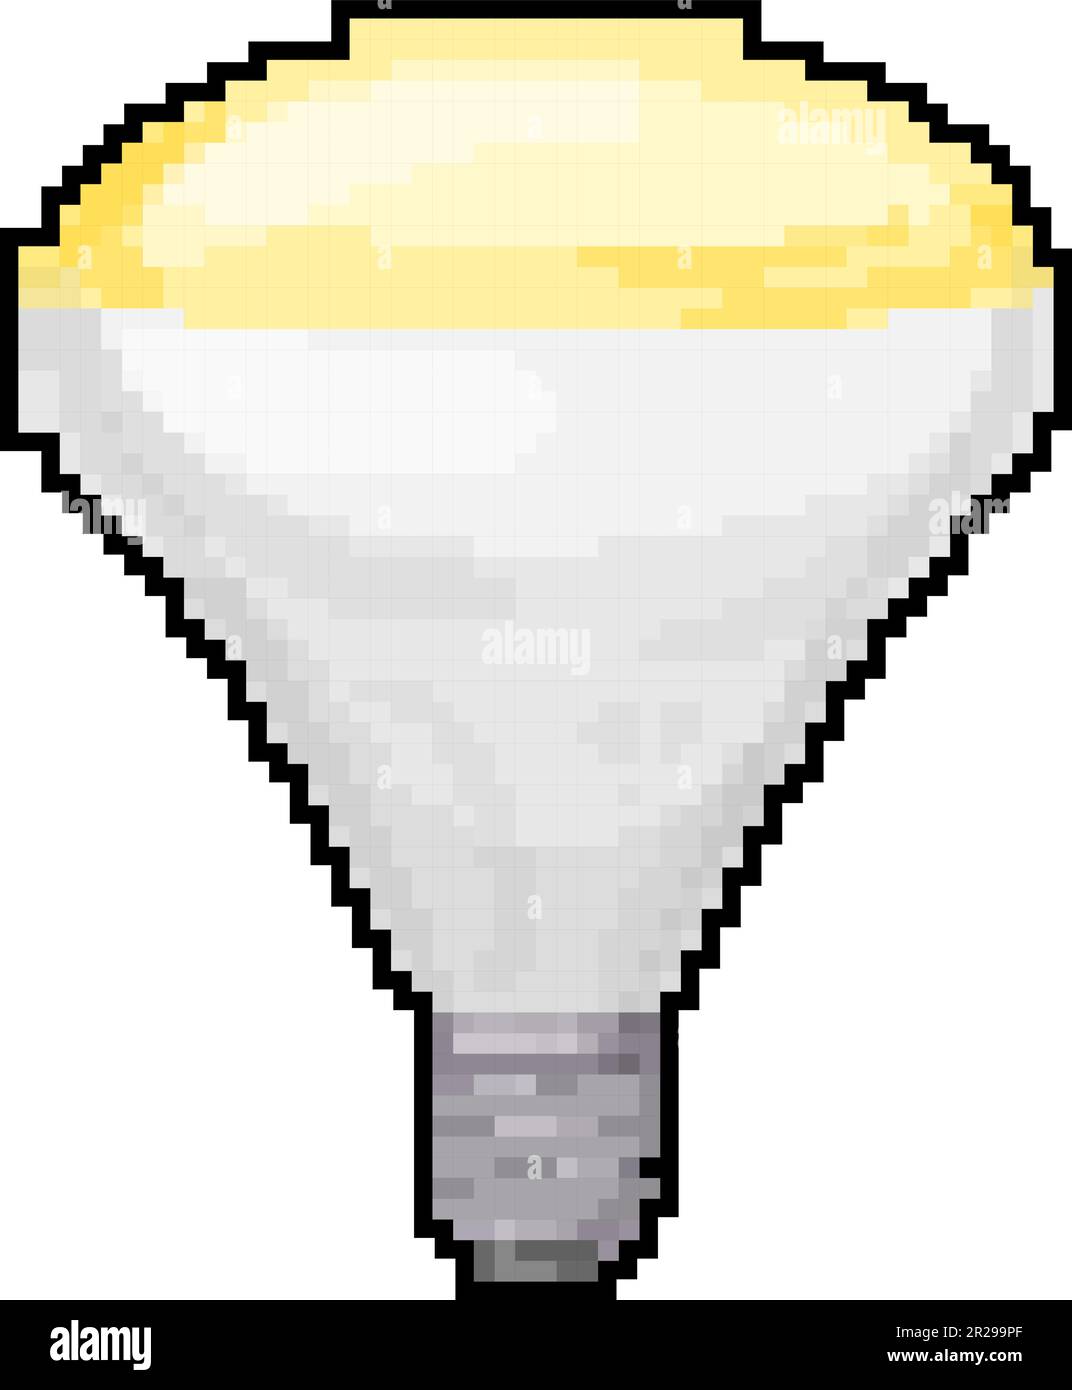 control smart light bulb game pixel art vector illustration Stock Vector